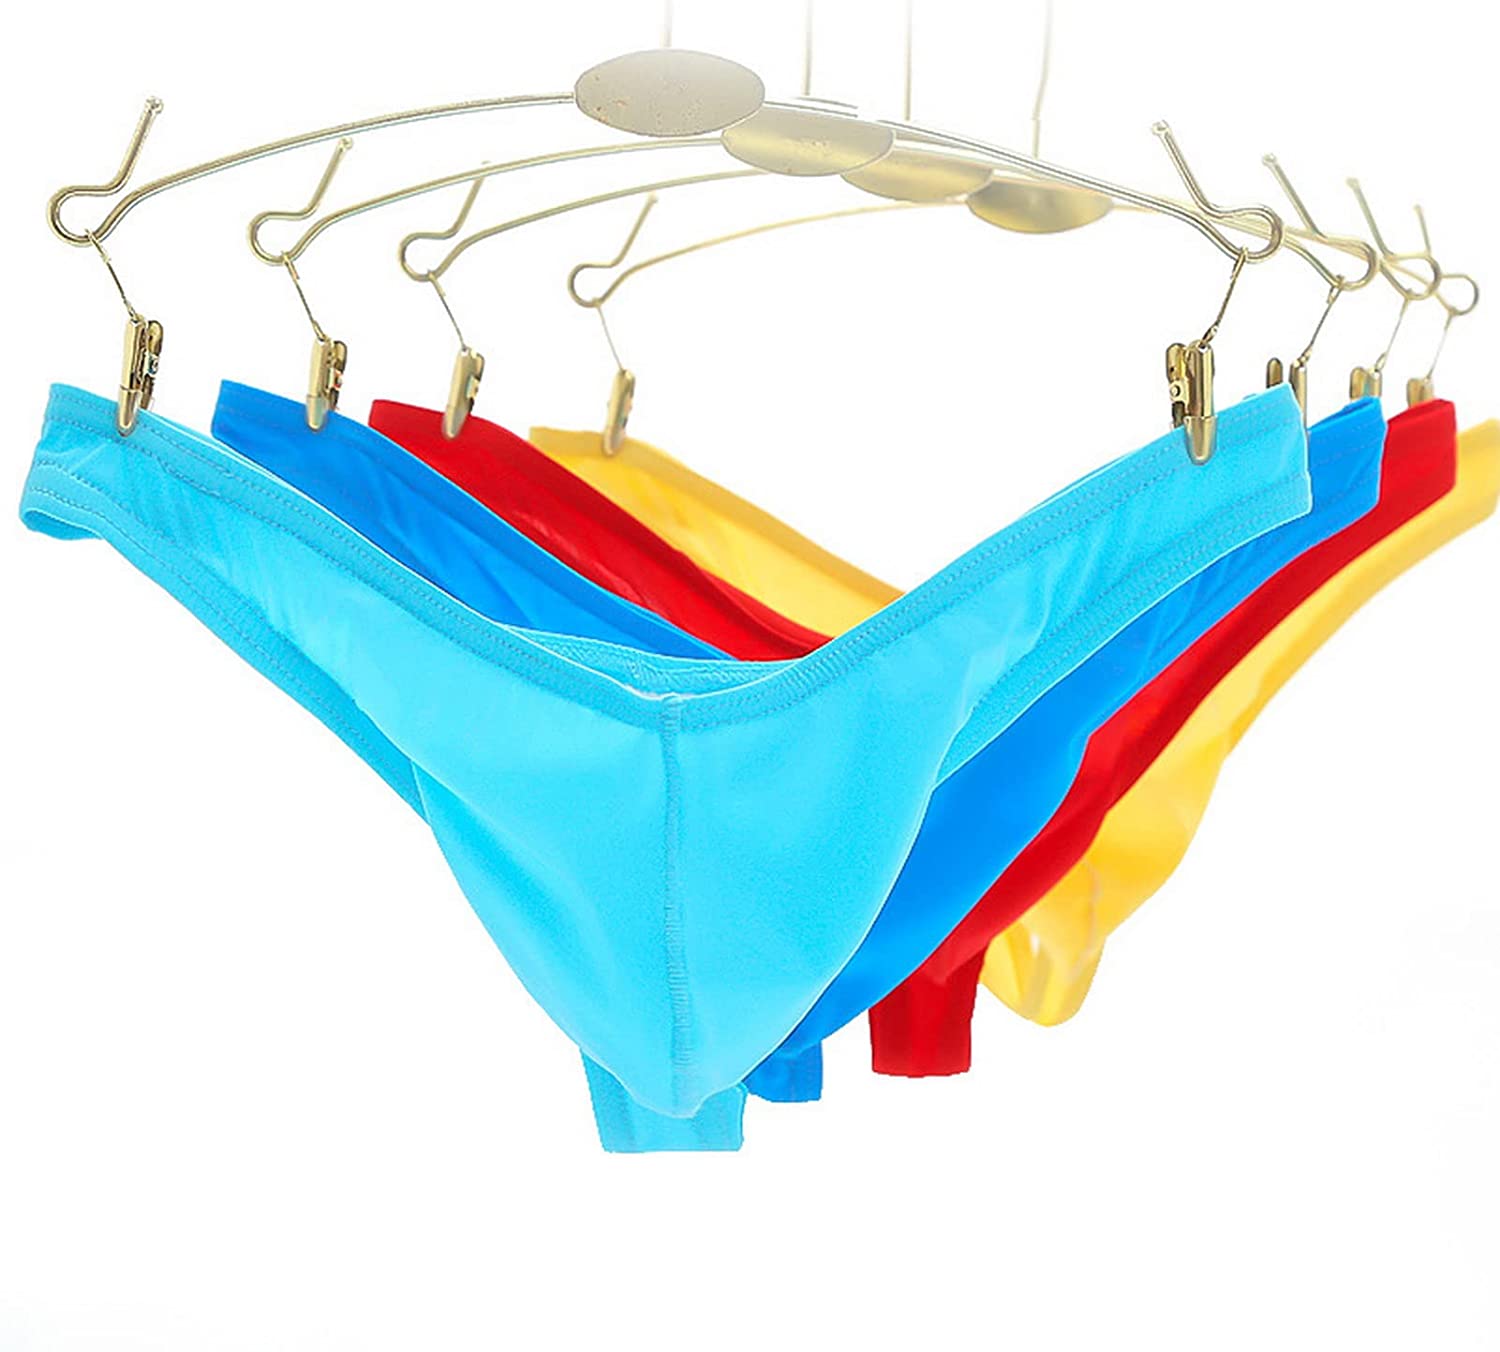 Faringoto Men Transparent Thongs And G strings Men's Underwear India